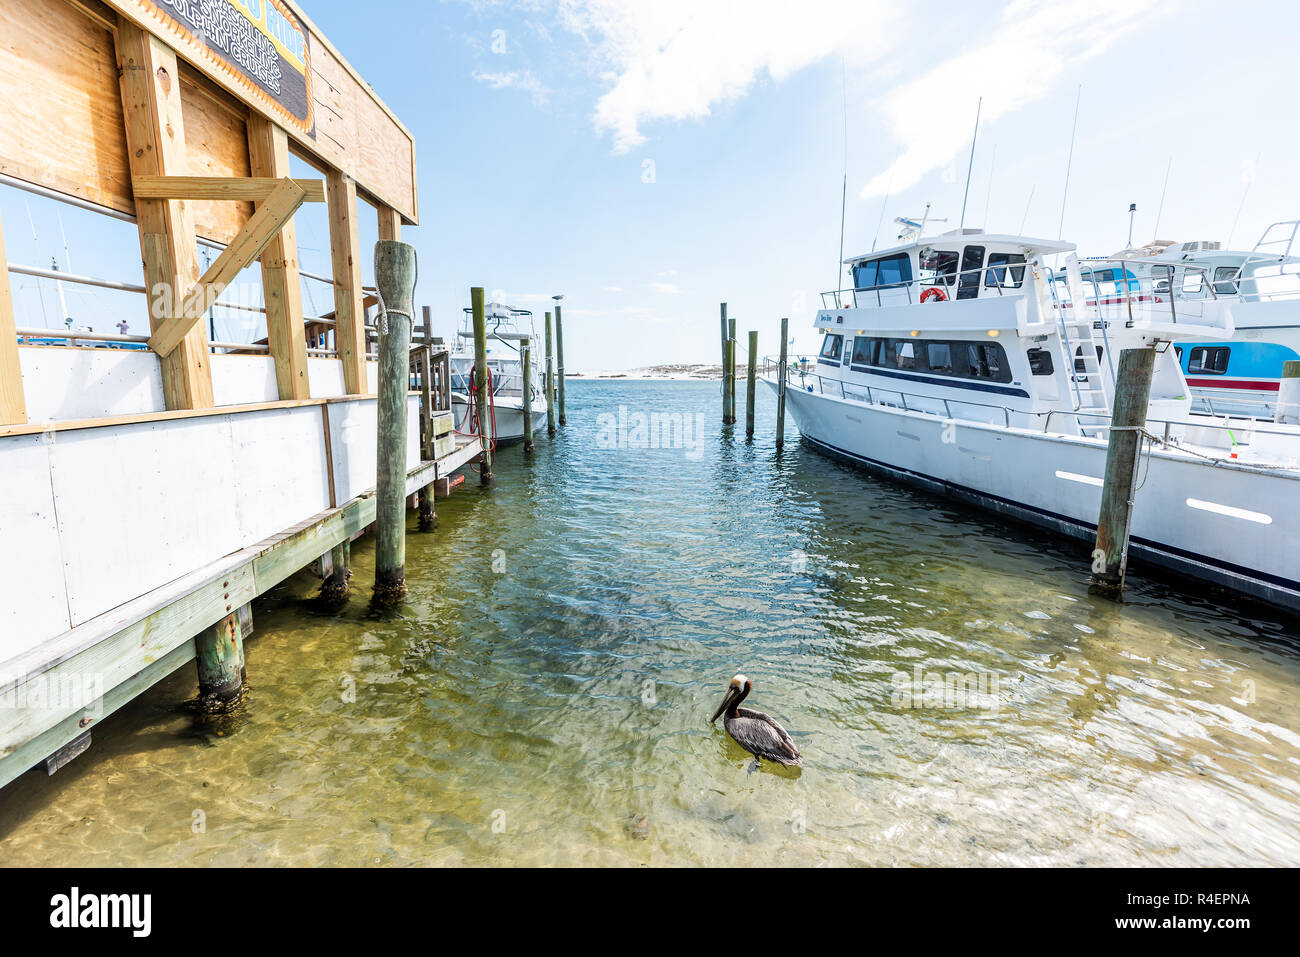 Destin, USA - April 24, 2018: City town Harborwalk village Harbor charter boat Boardwalk marina during sunny day in Florida panhandle gulf of mexico w Stock Photo